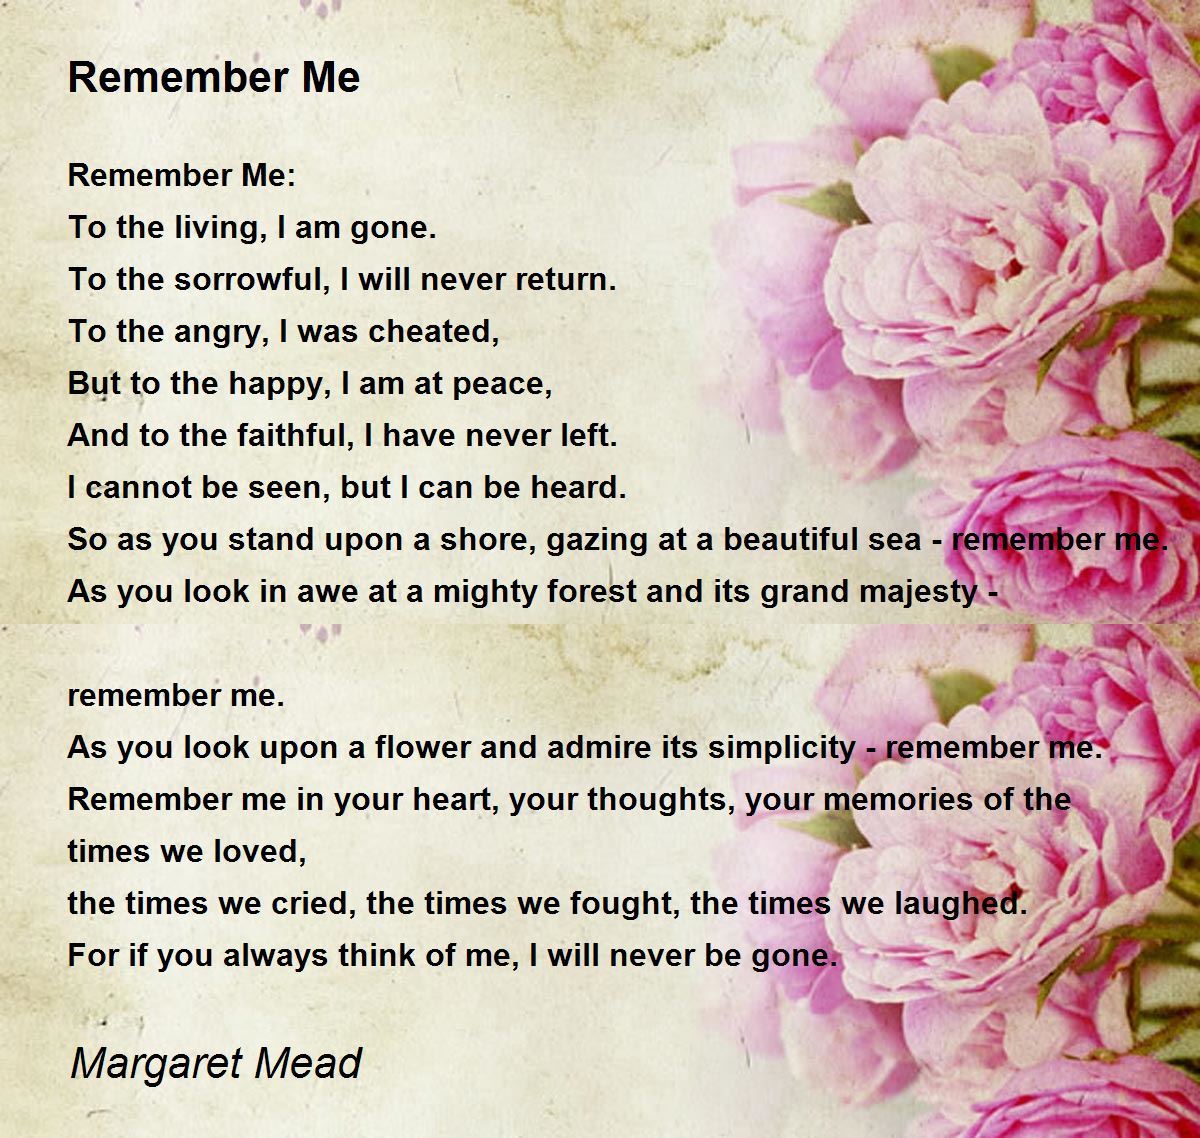 Remember Me - Remember Me Poem by Margaret Mead